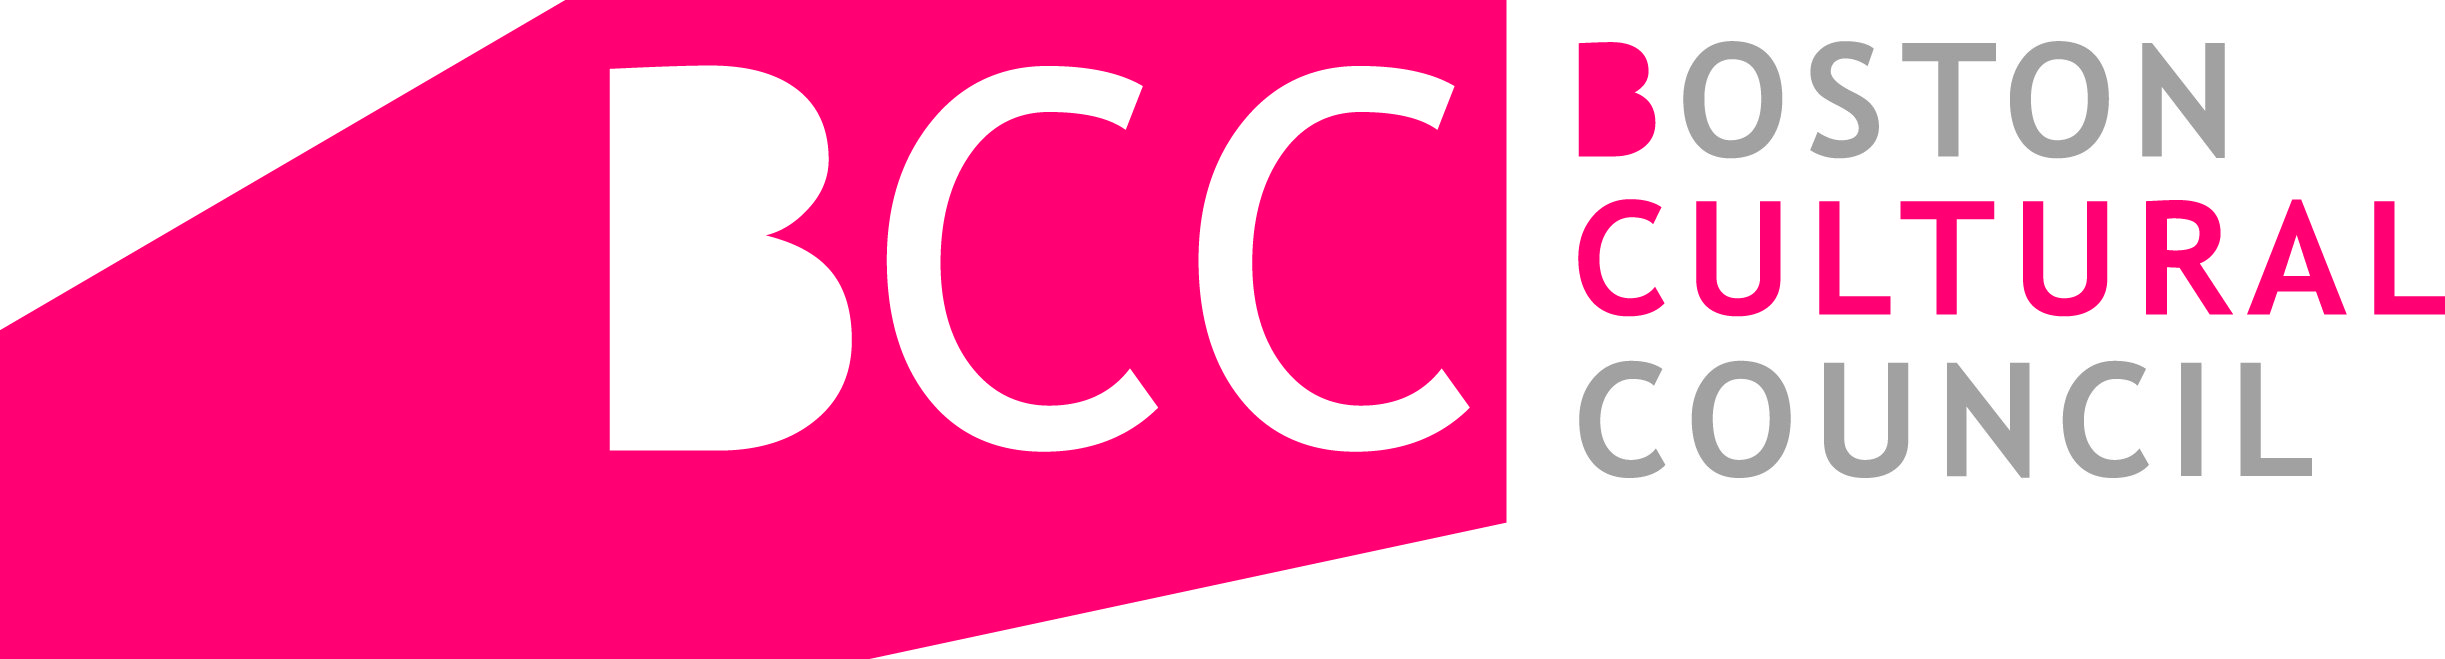 Boston-Cultural-Council-logo